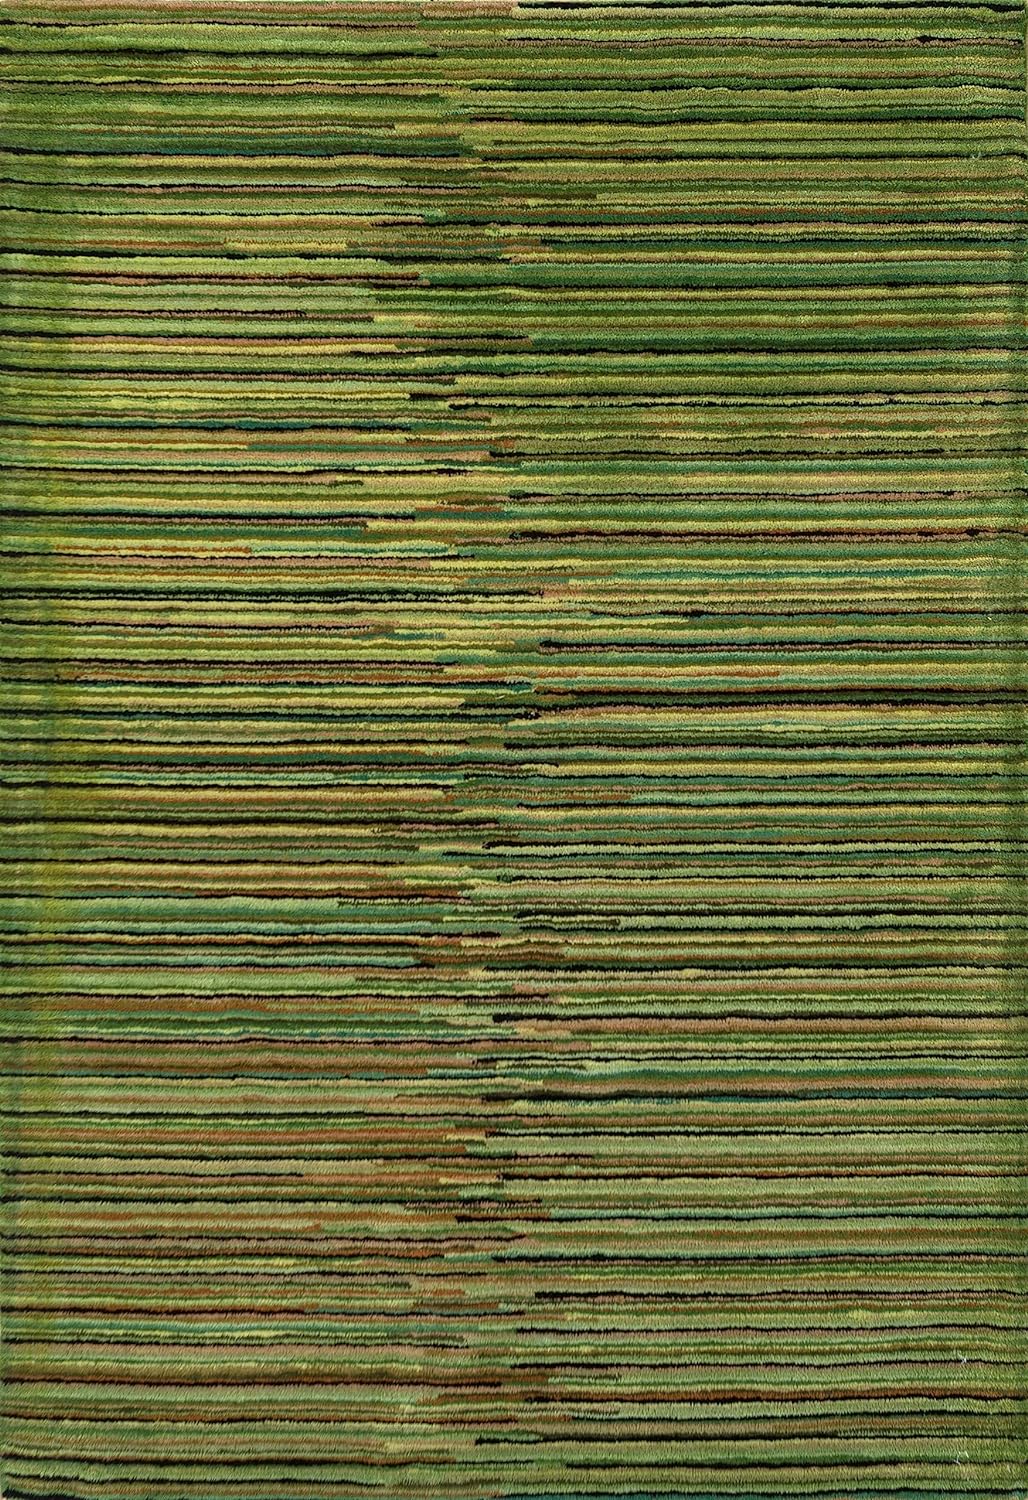 Vibrant Green Wool Rug - 6 x 9 ft, Handmade, Non-slip | Wool & Viscose Handmade Hand Tufted Striped Carpet (Green, 6x9 Feet)